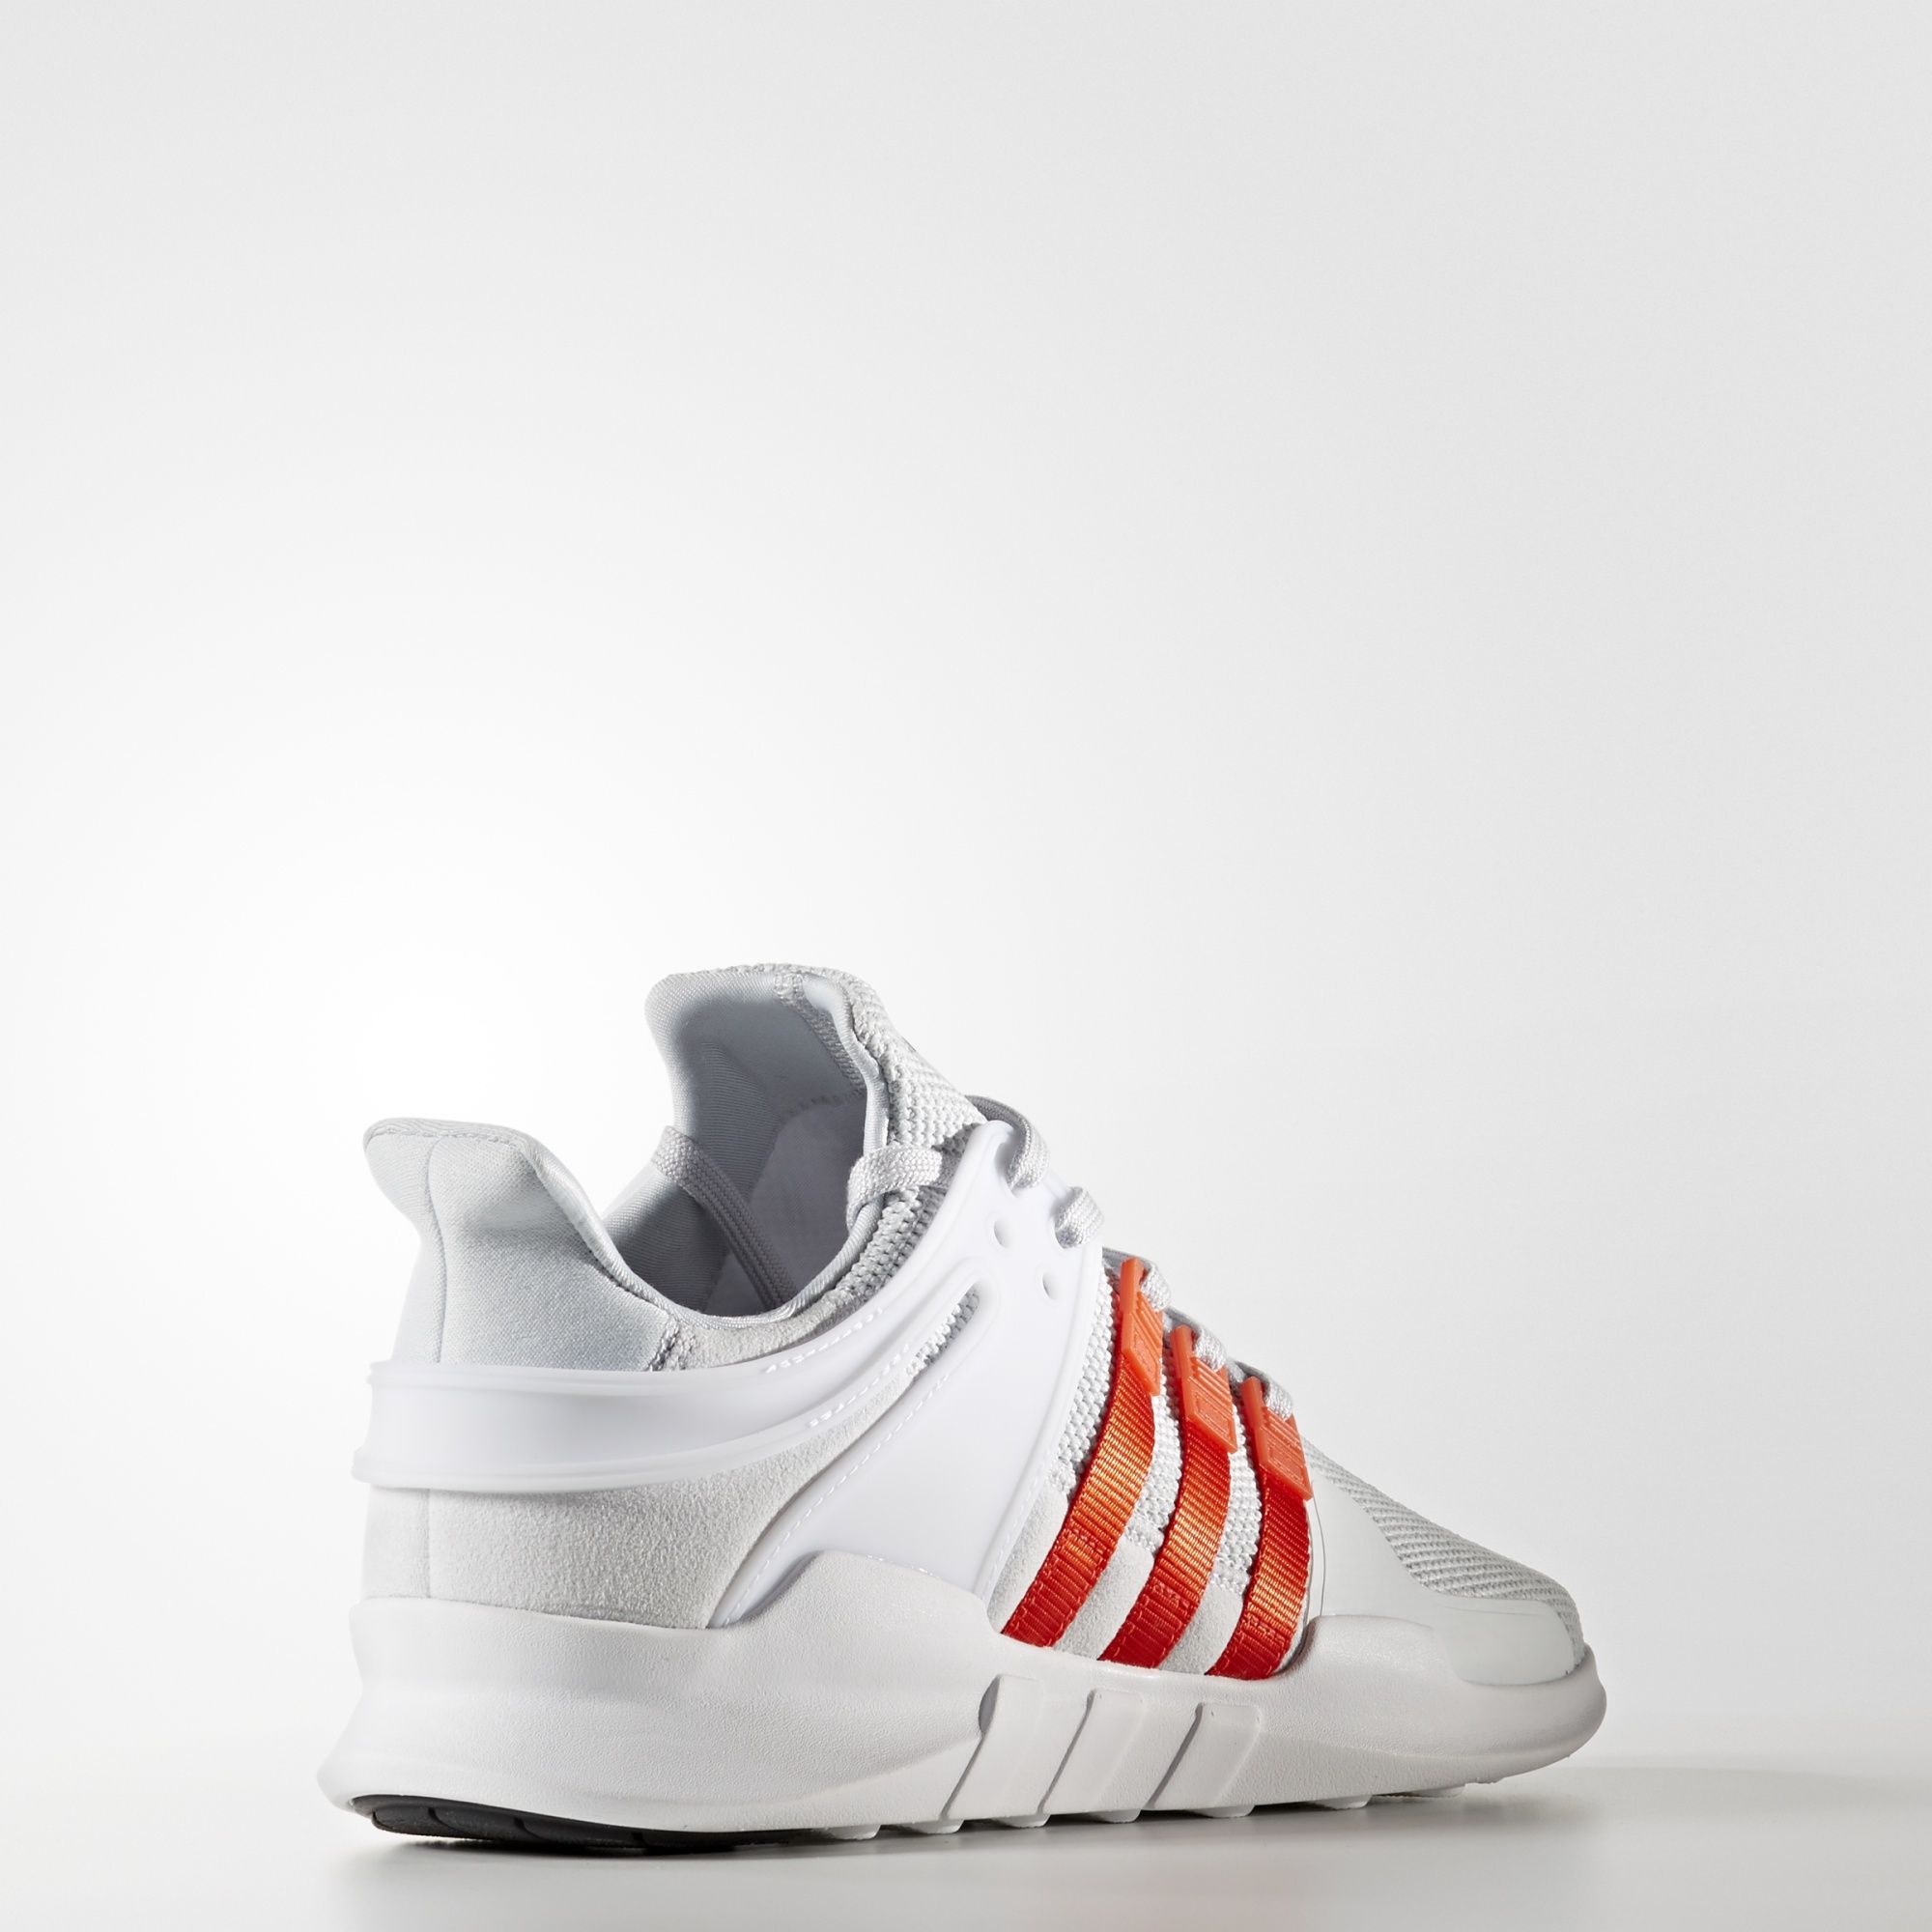 Adidas EQT Support ADV
Grey / Orange / White